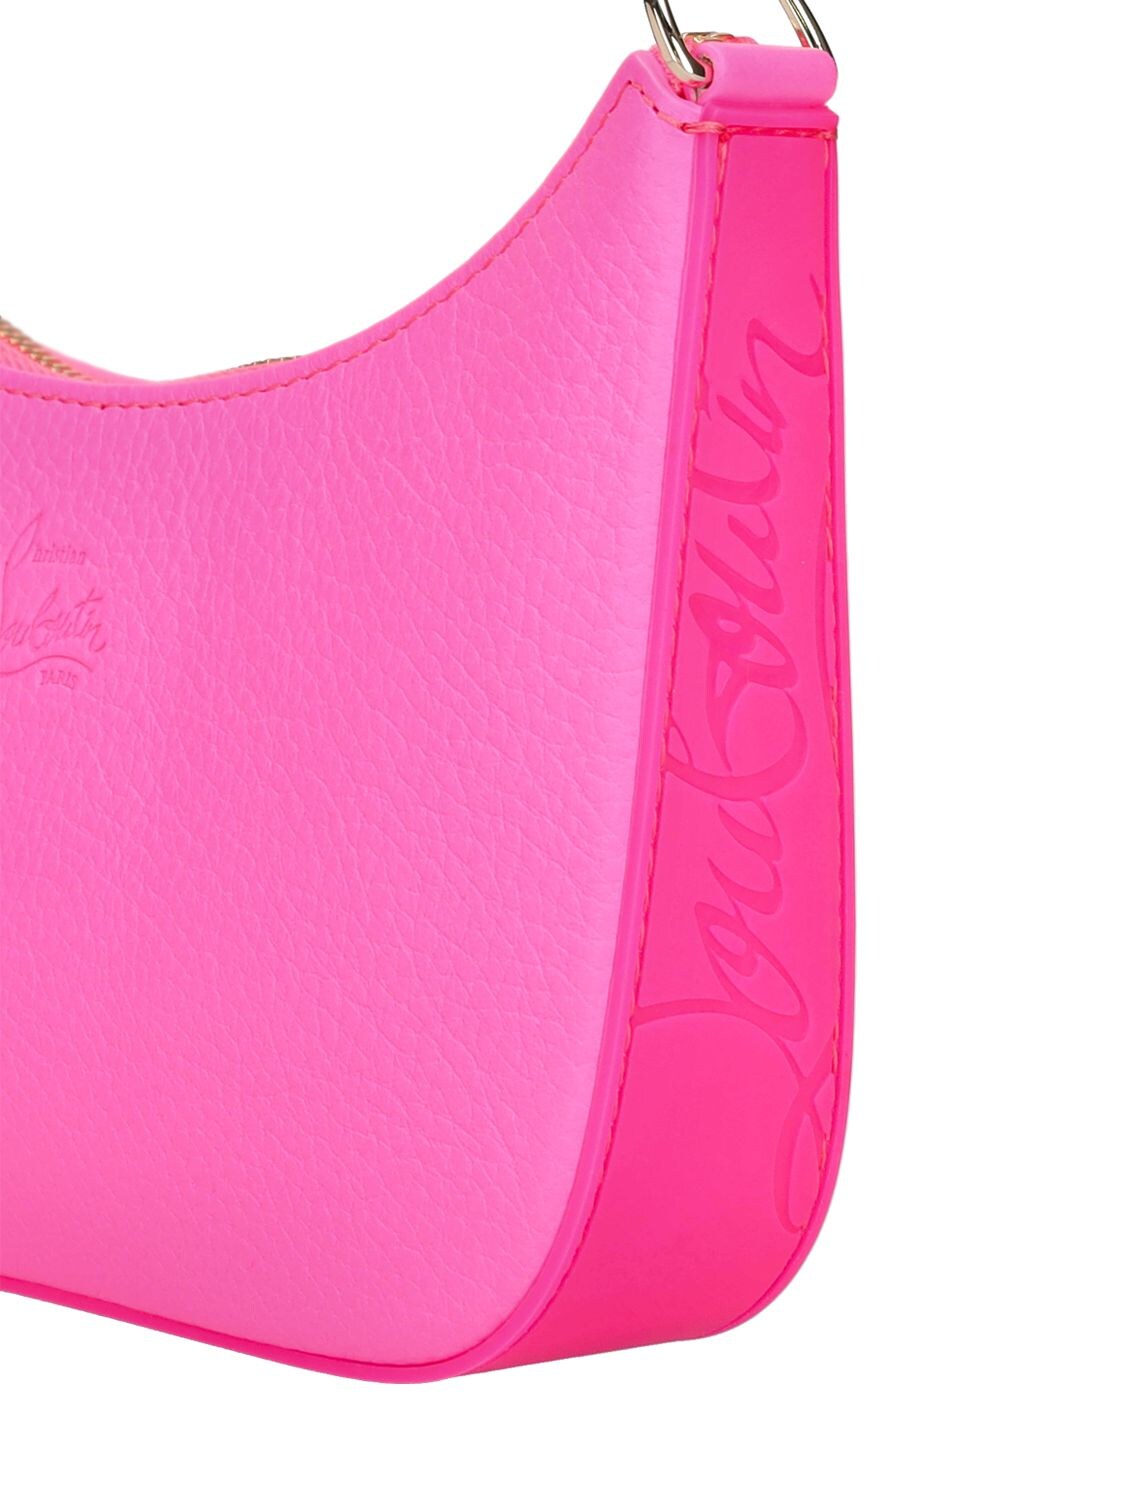 Loubila Chain Mini Leather Shoulder Bag in Pink - Christian Louboutin